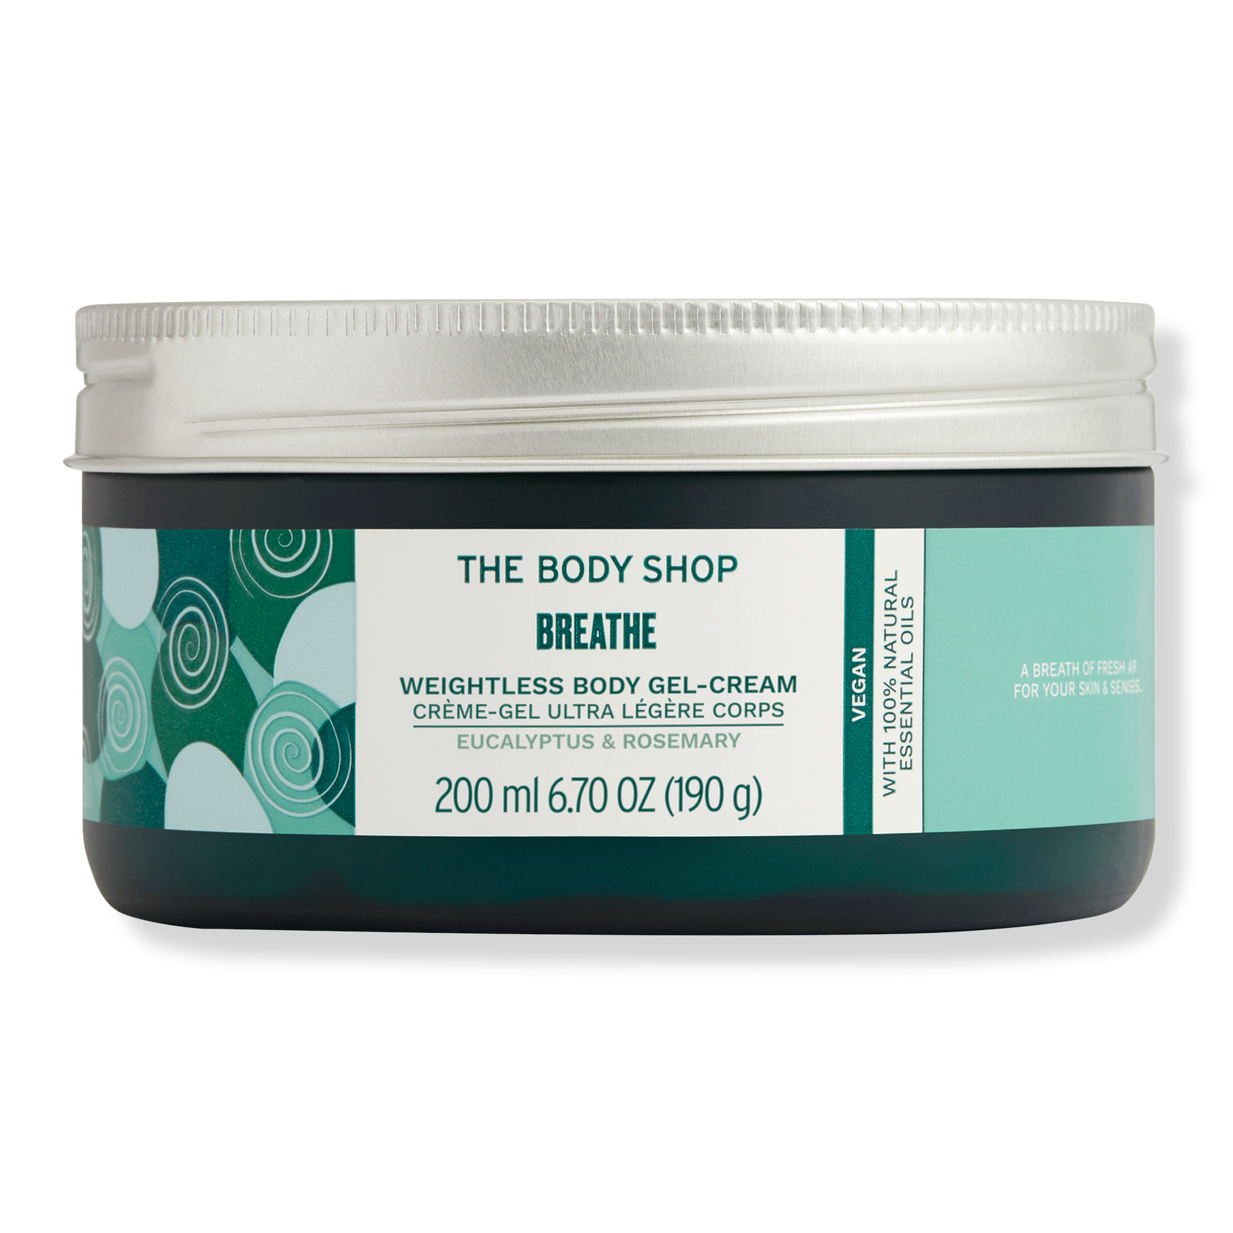 deform Forud type Ark Eucalyptus & Rosemary Breathe Weightless Body Gel-Cream - The Body Shop |  Ulta Beauty